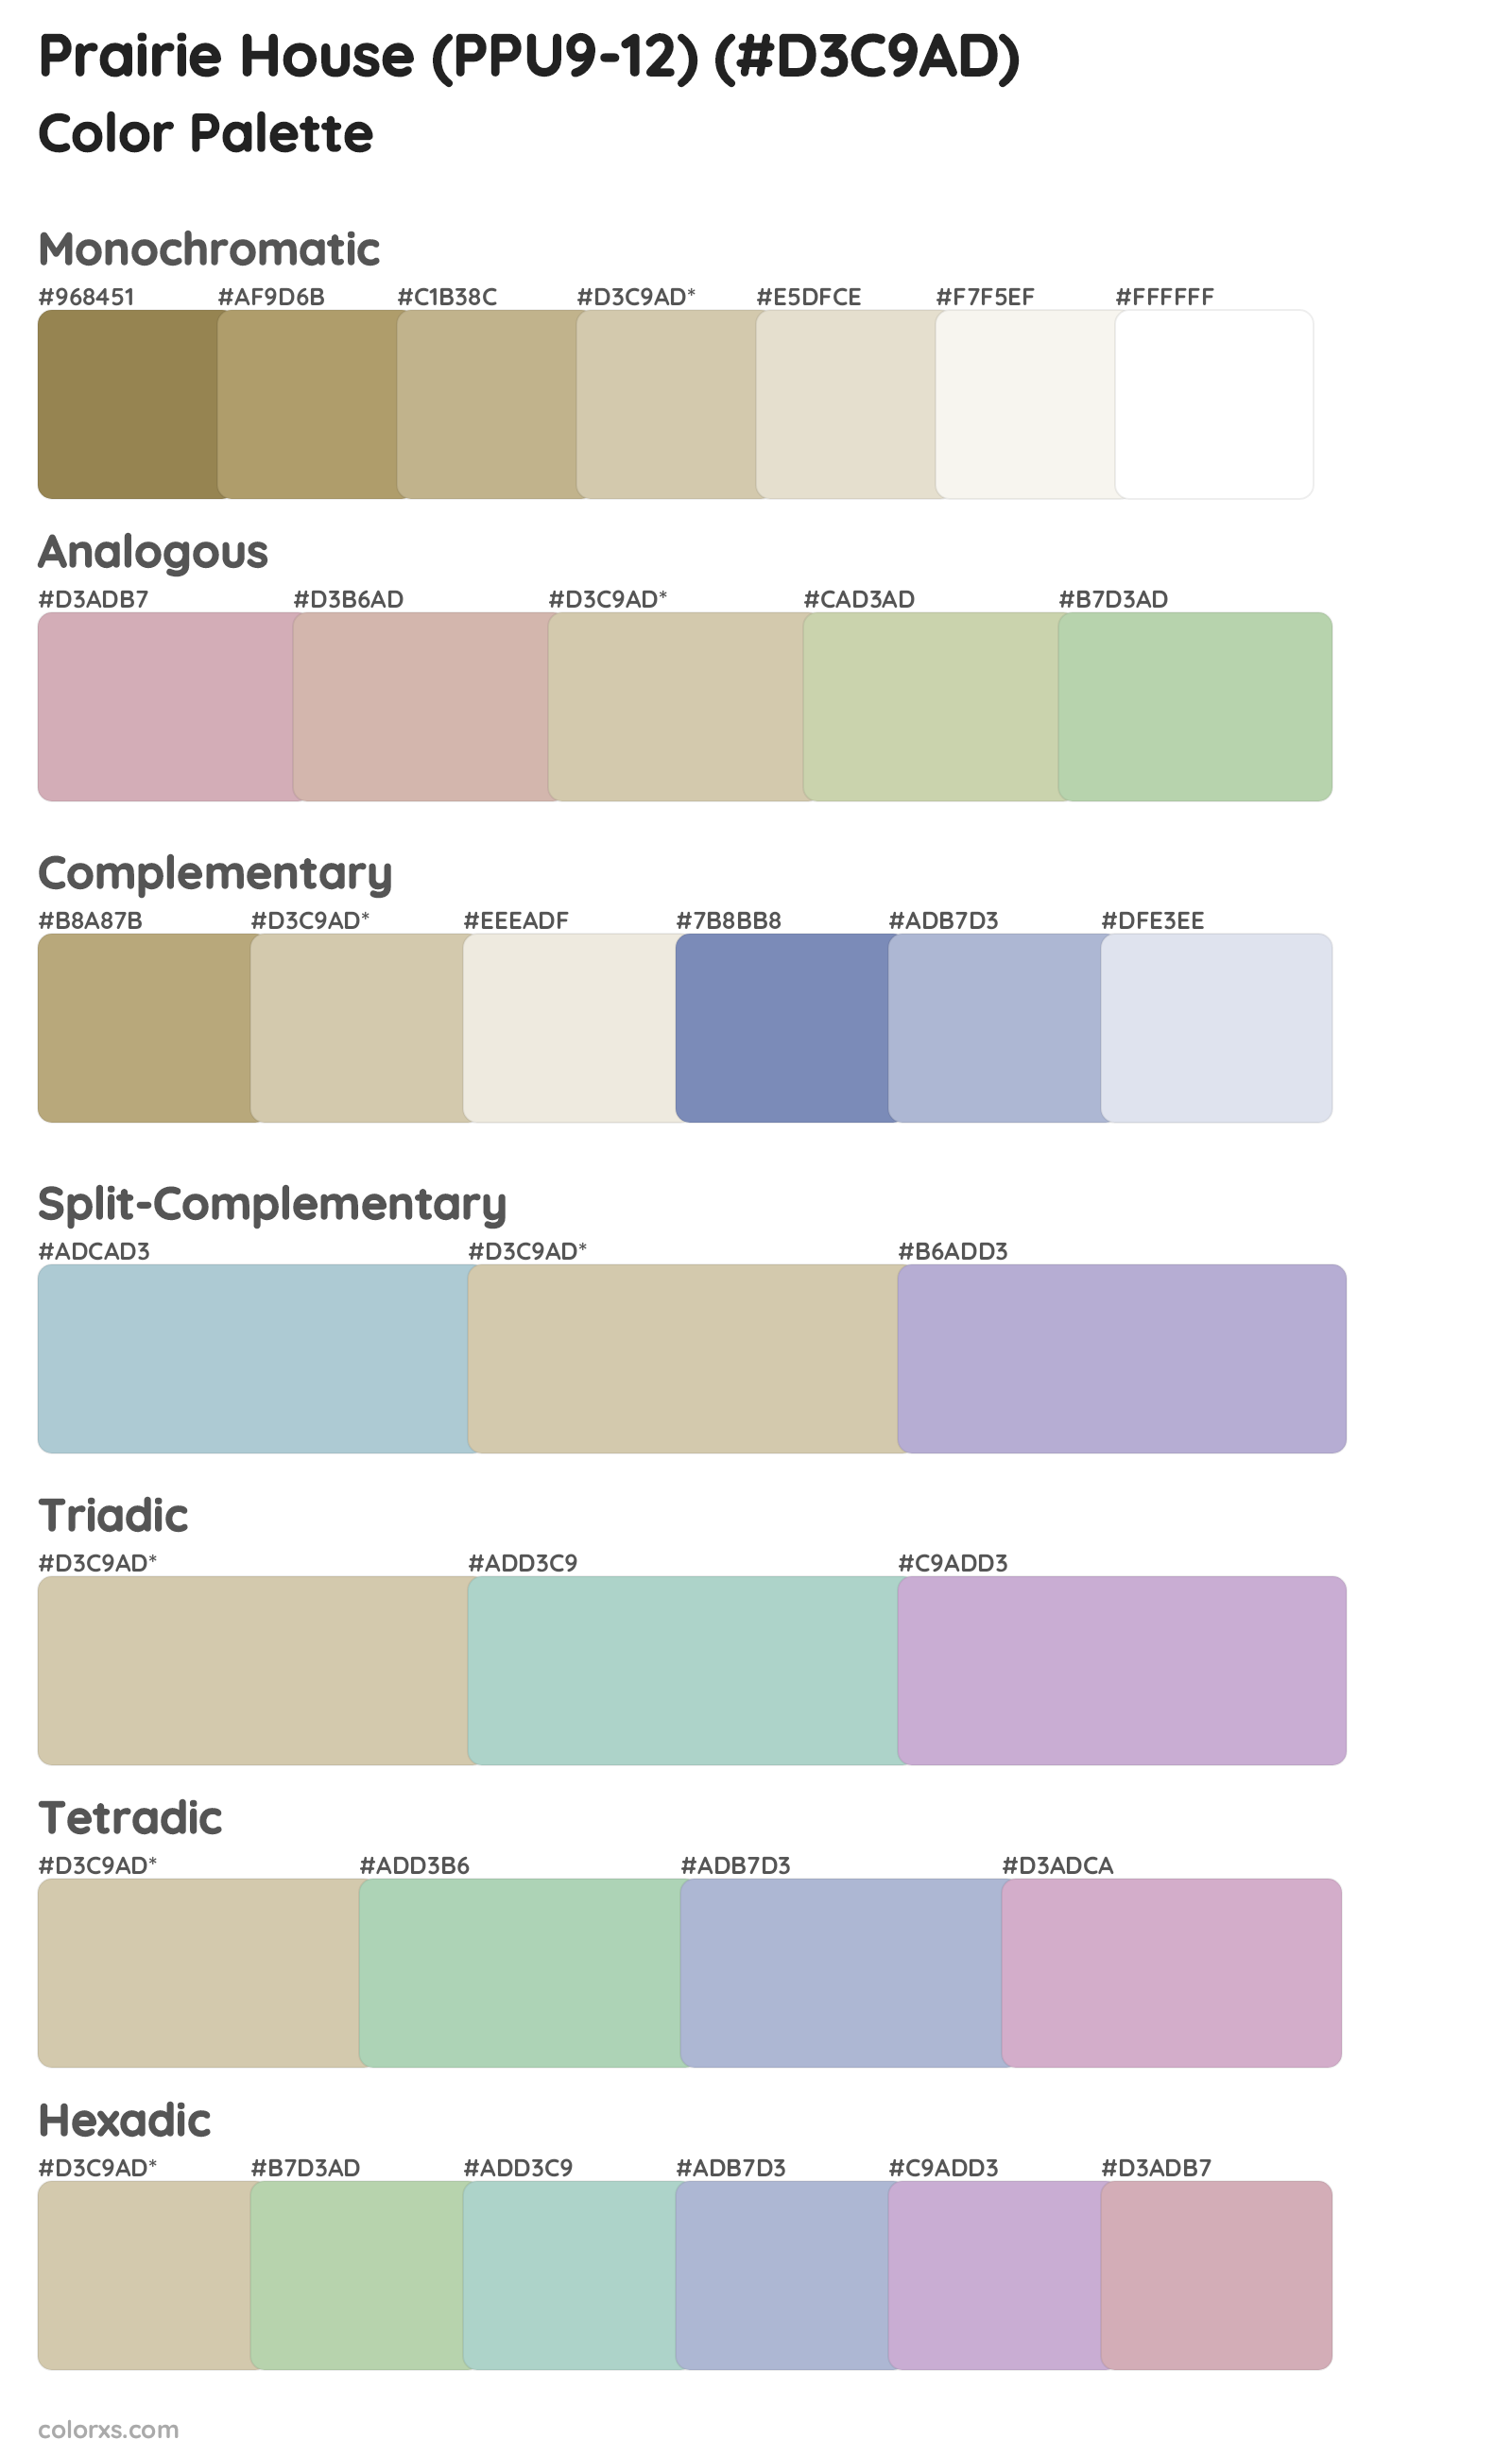 Prairie House (PPU9-12) Color Scheme Palettes